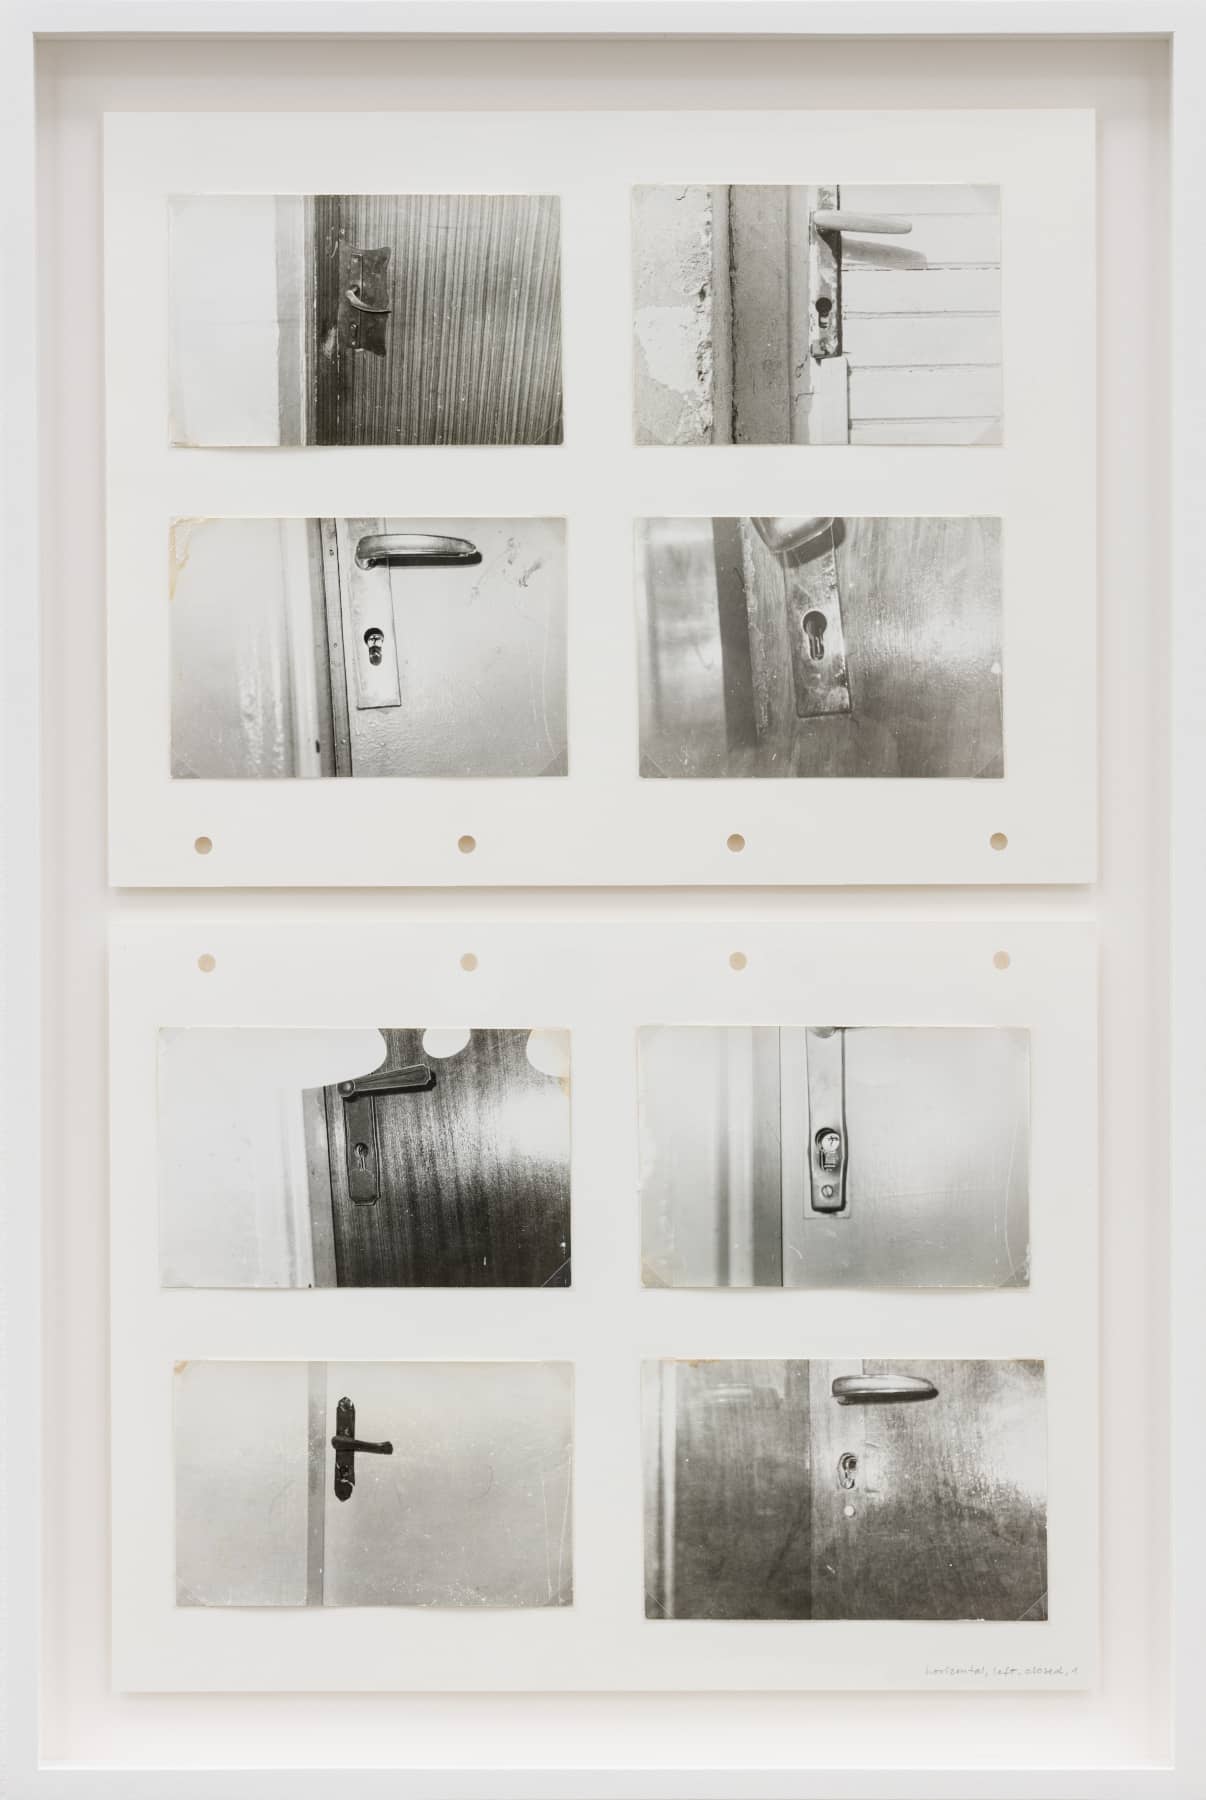 5_jonathan rosic_doors 7_horizontal, left, closed, 1_2022_found photographs_53.5x36cm_shivadas de Schrijver